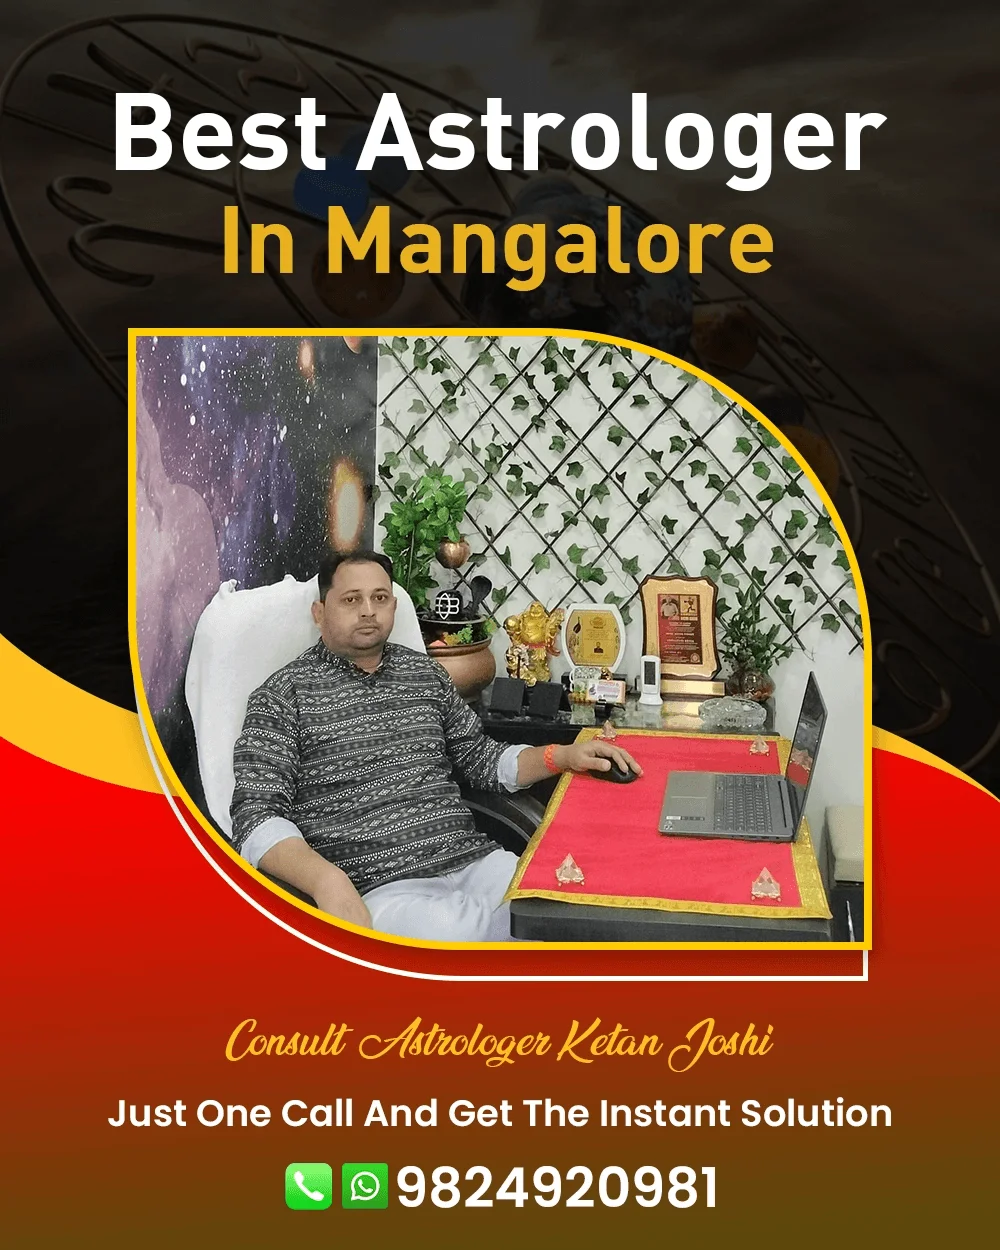 Best Astrologer In Mangalore